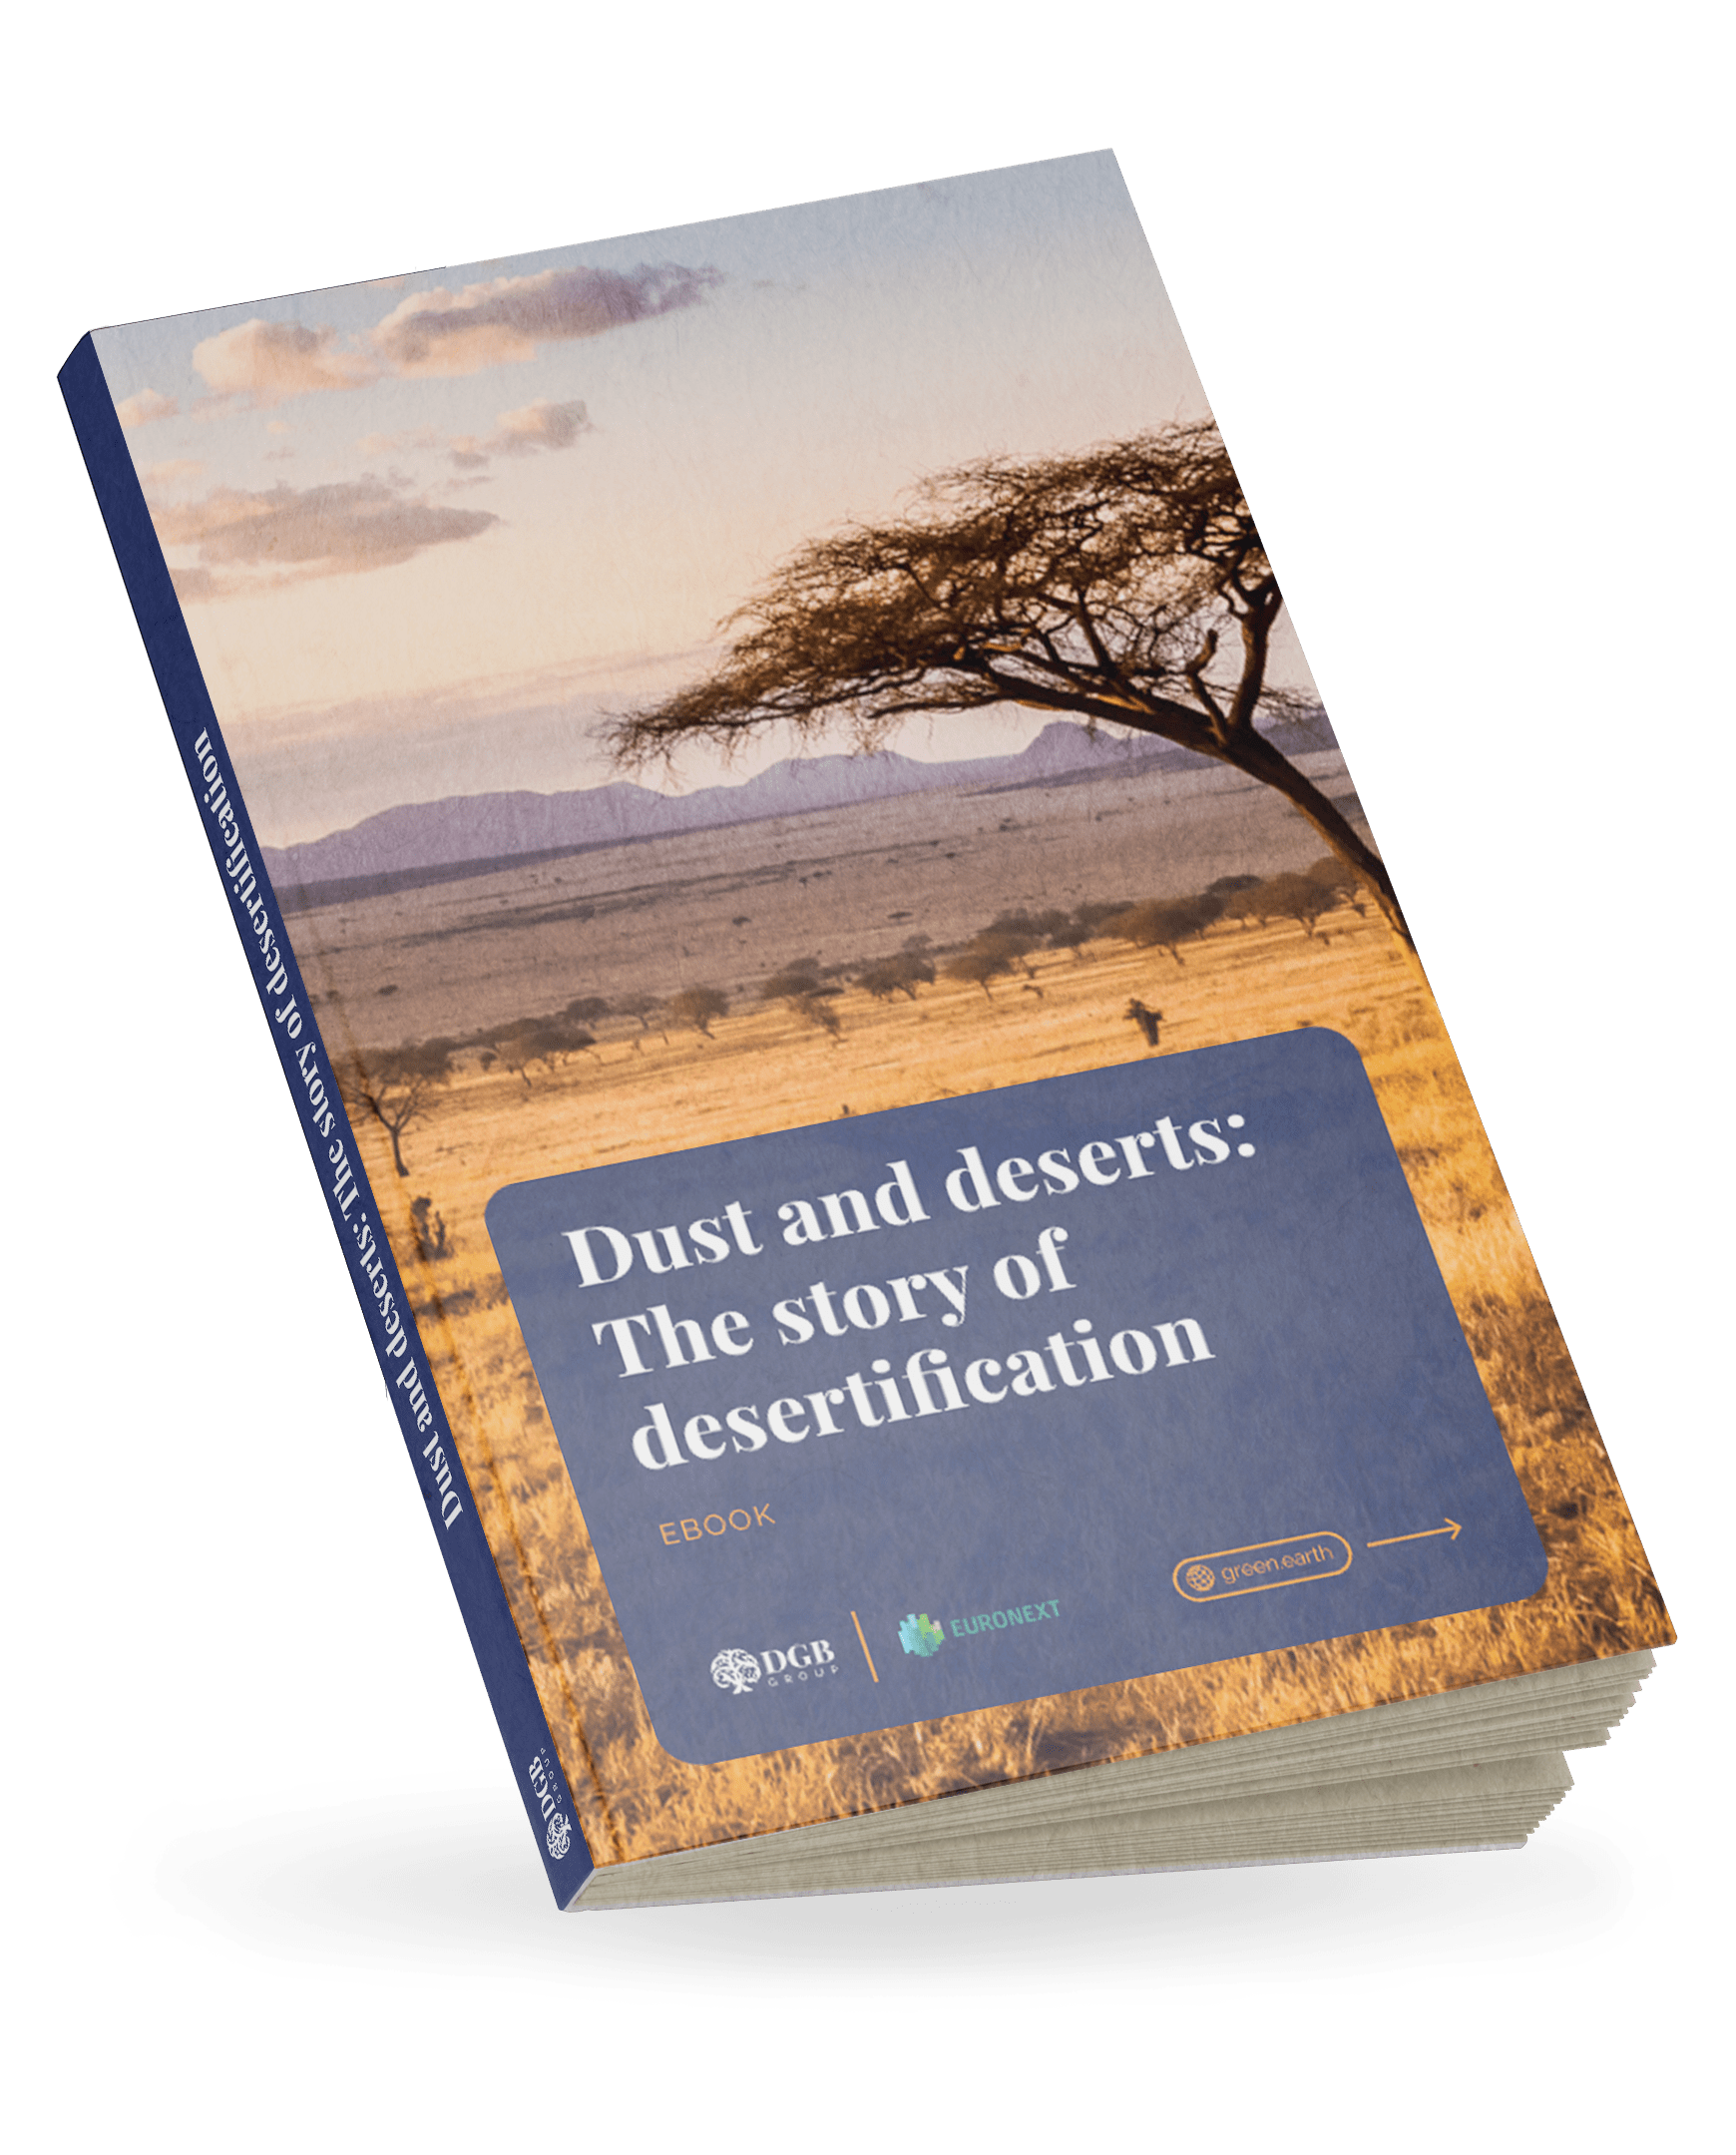 dgb mockup_Desertification ebook